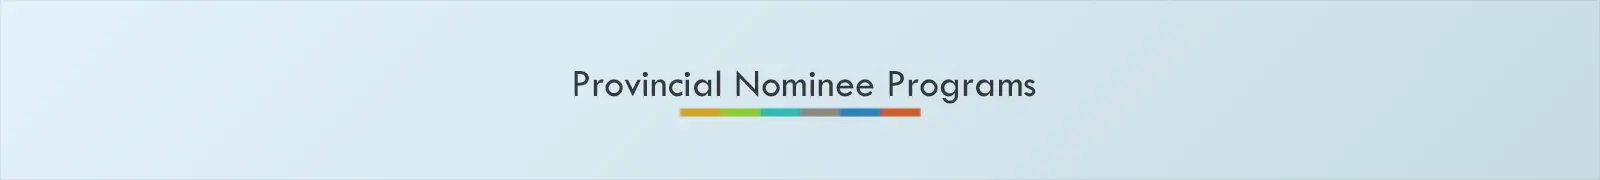 provincial nominee program